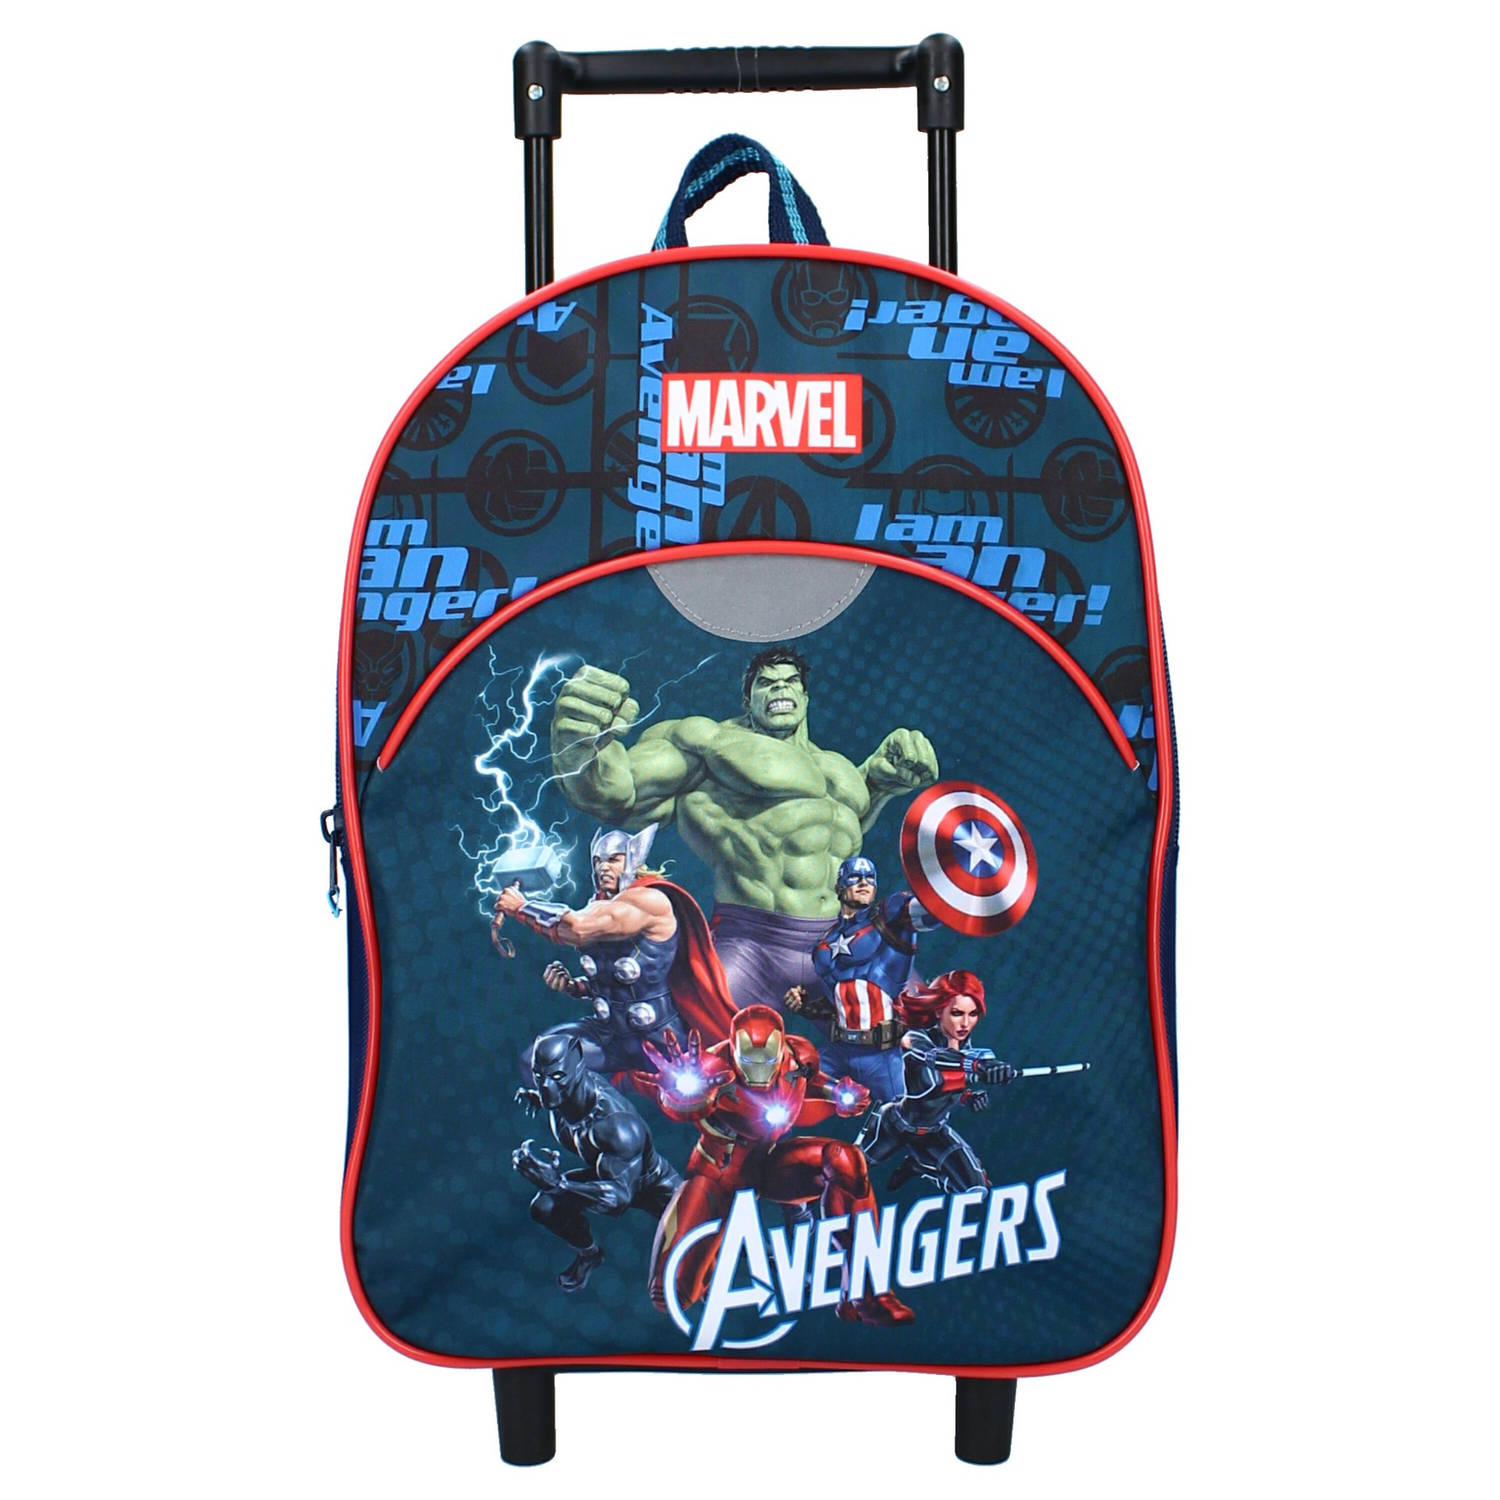 Marvel trolleyrugzak Avengers junior 9,1 liter polyester navy